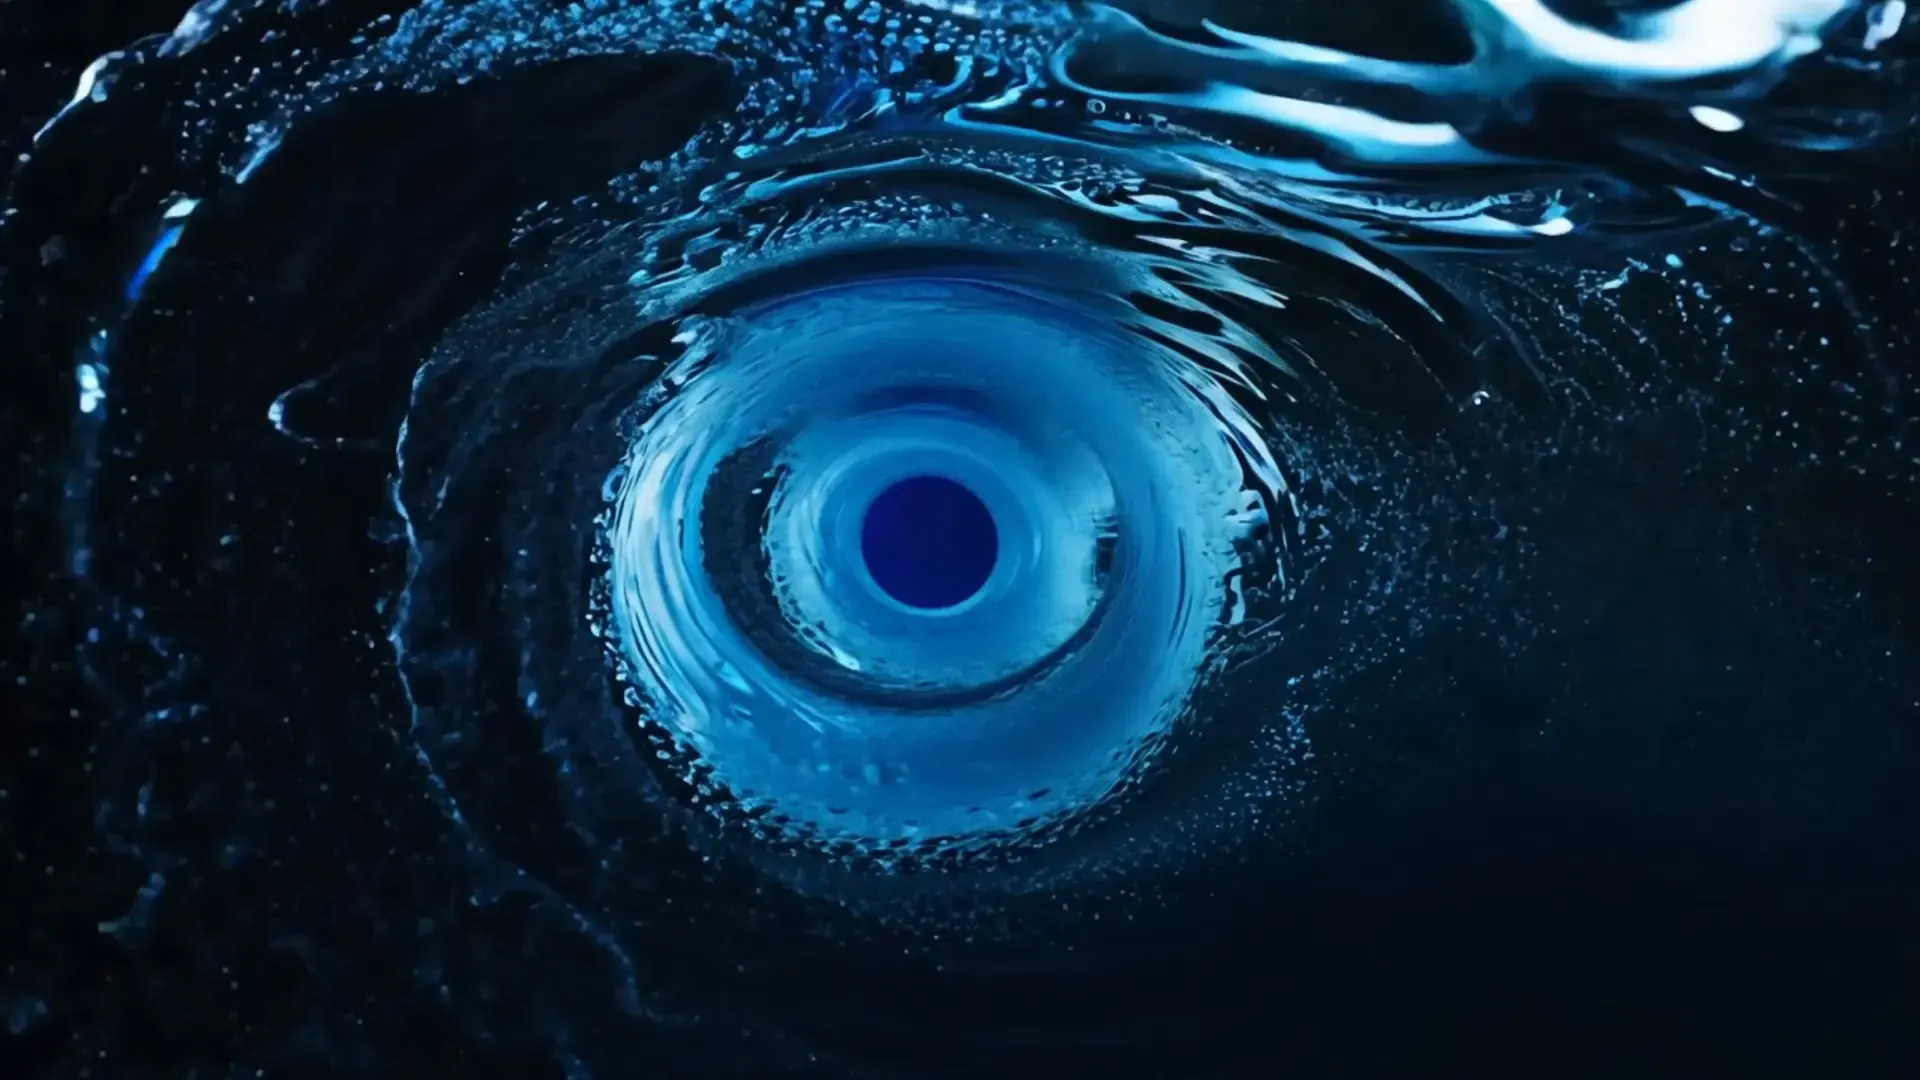 Fluidic Swirl Logo Animation Background for Captivating Brand Reveal